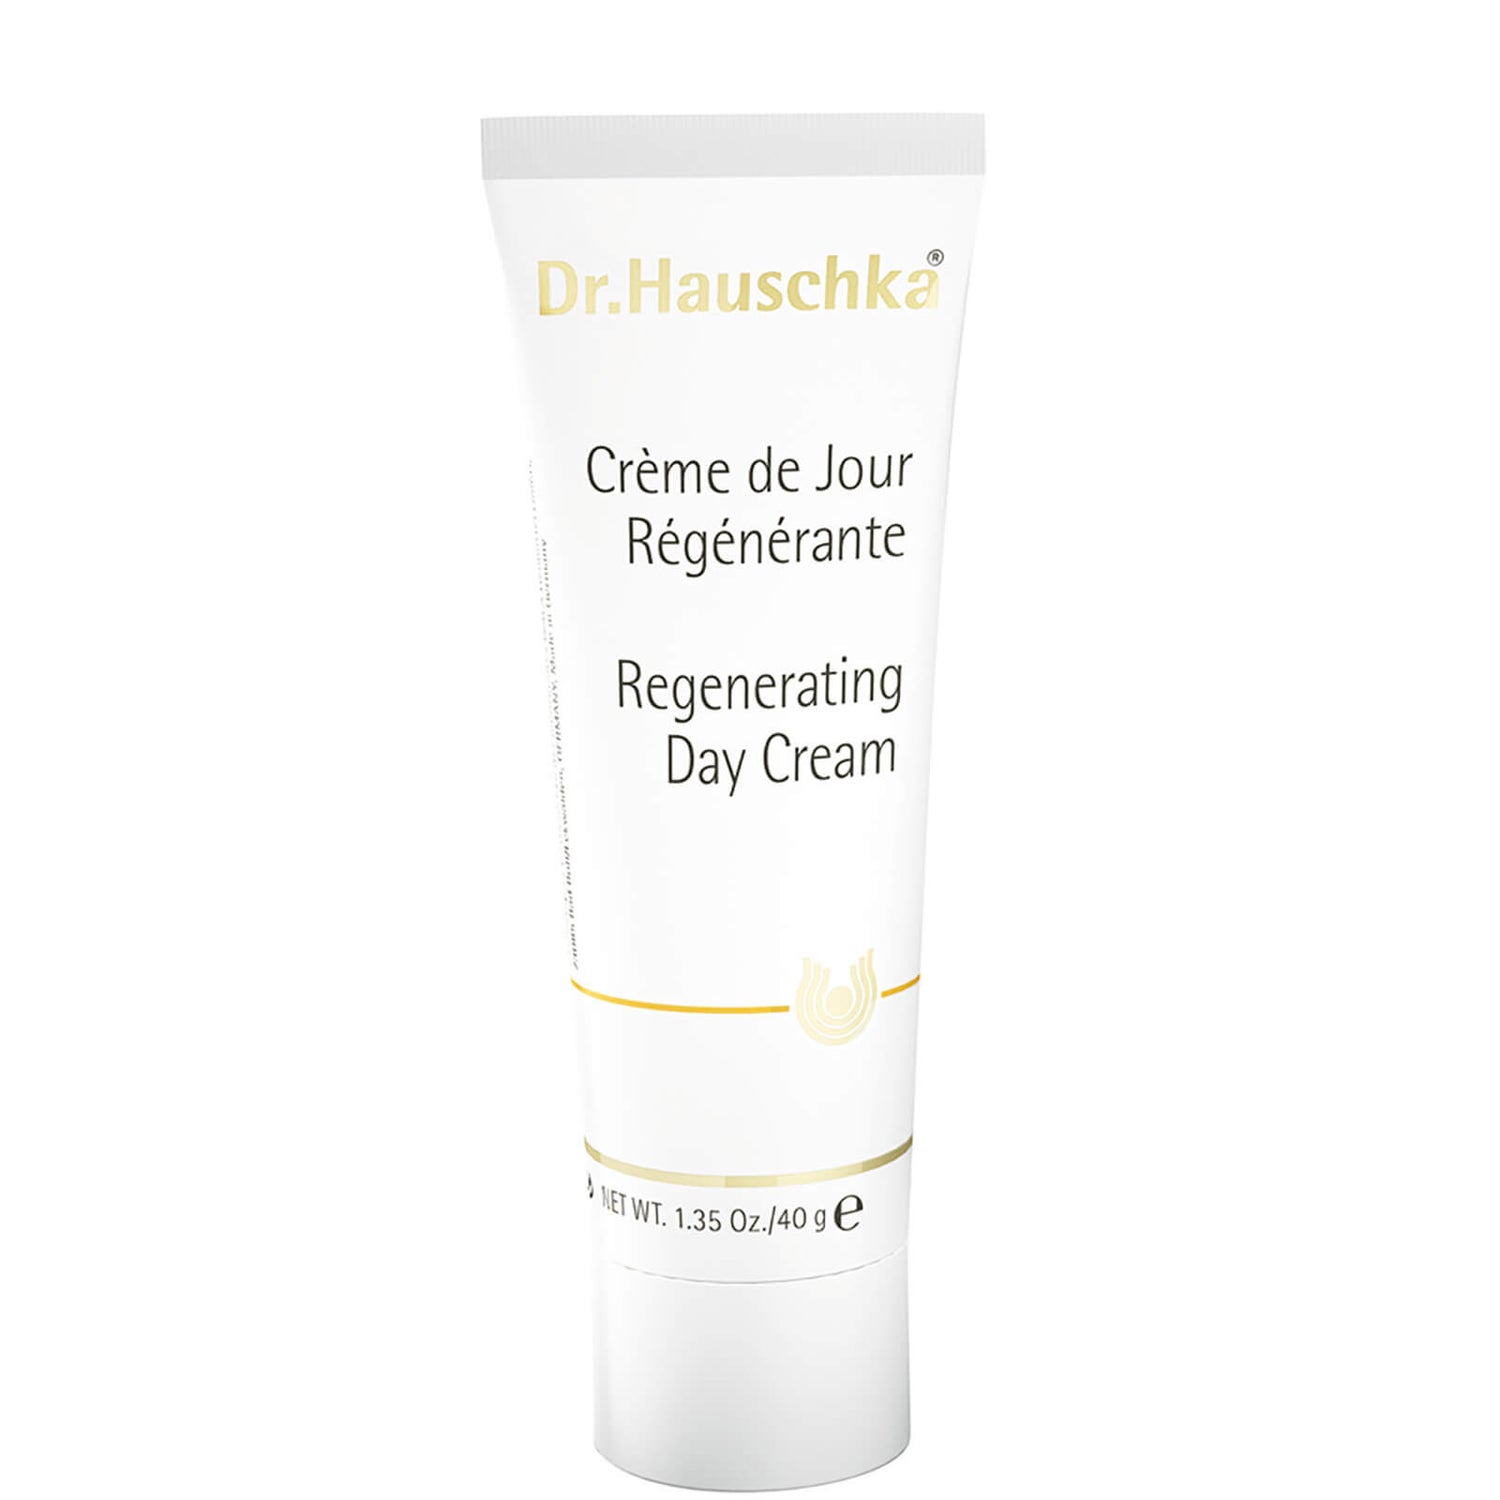 Dr.Hauschka Regenerating Day Cream 40g